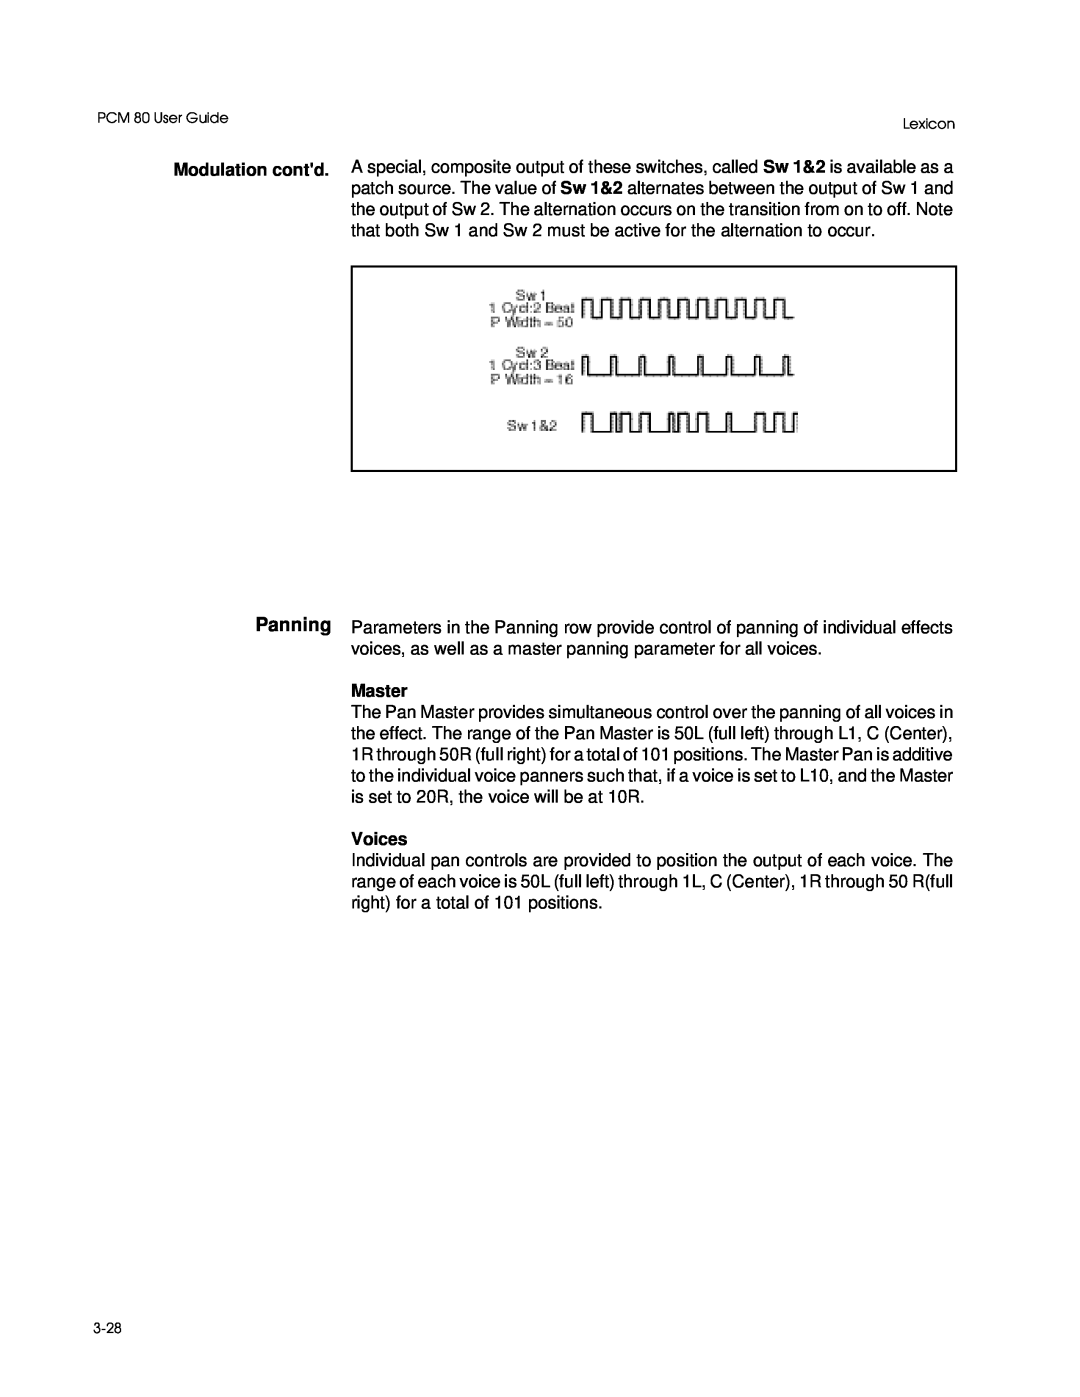 Lexicon manual Panning, Modulation contd, Master, Voices, PCM 80 User Guide, Lexicon, 3-28 